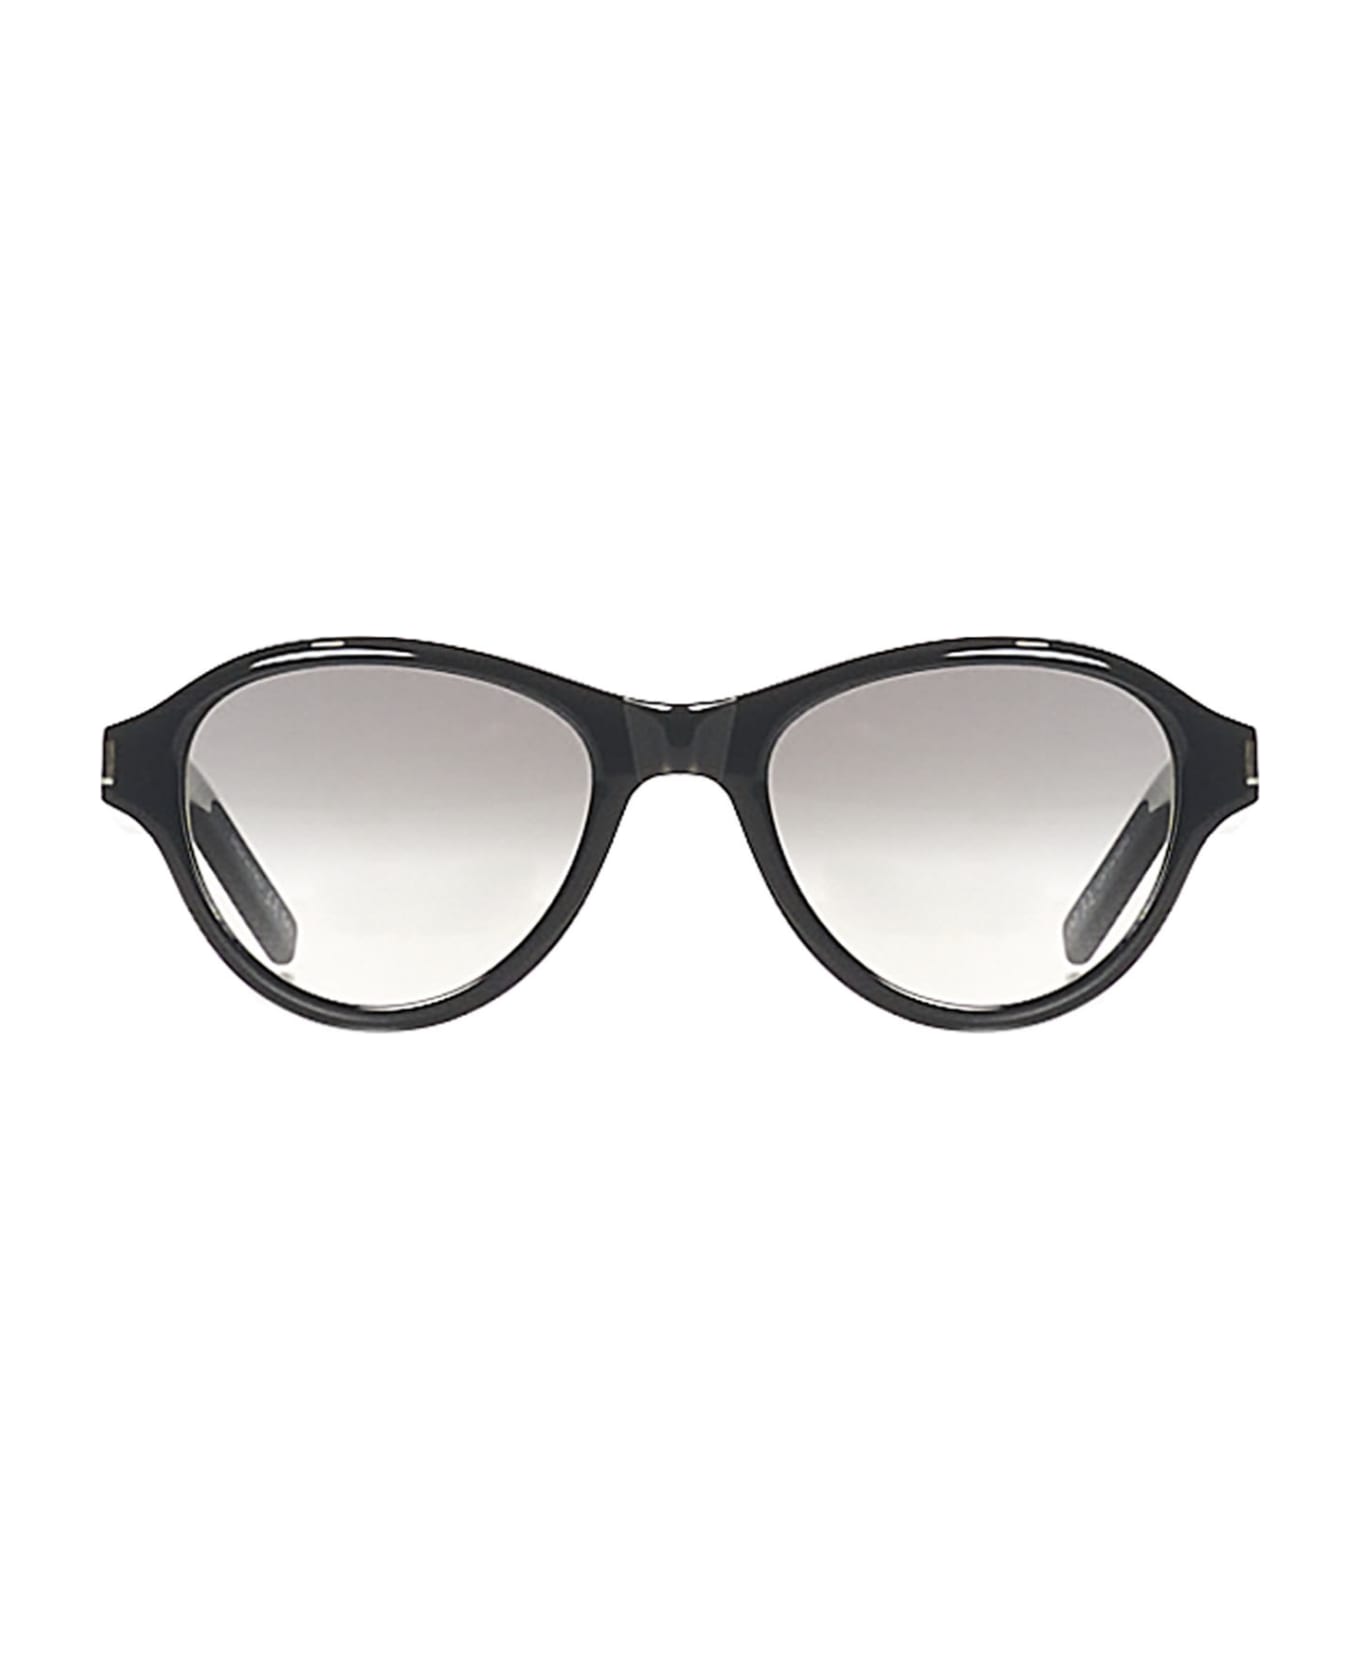 Saint Laurent Sl520 Sunglasses - Black